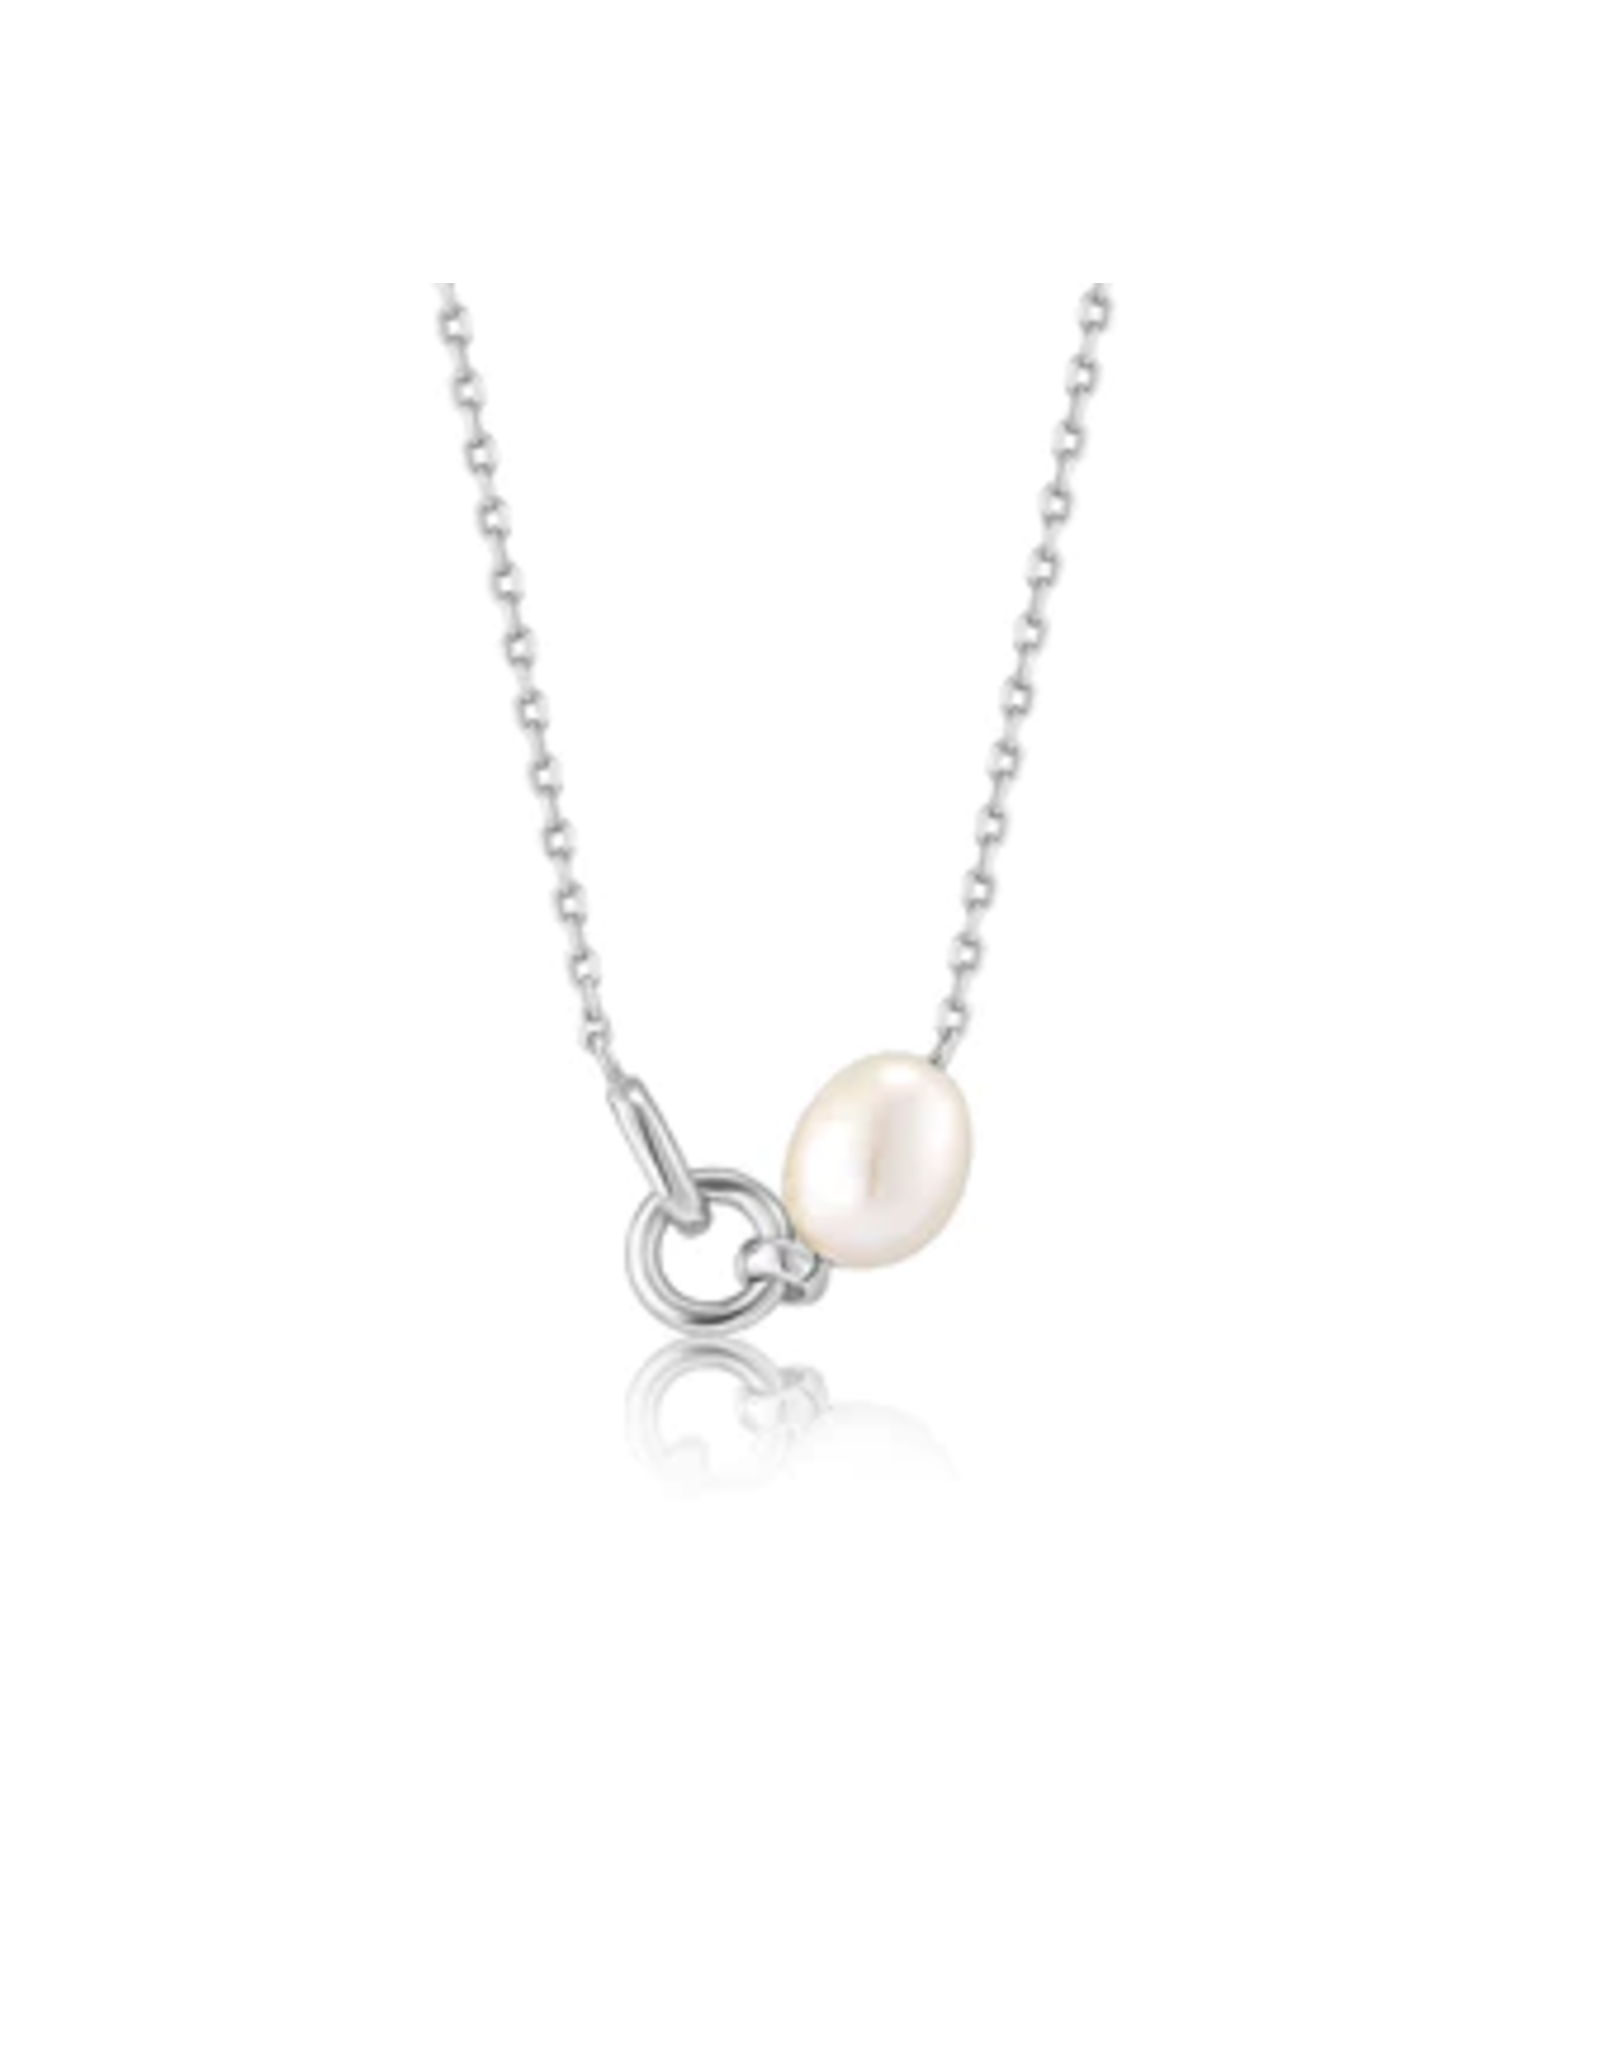 Ania Haie Ania Haie Pearl Power Pearl Link Chain Necklace, silver